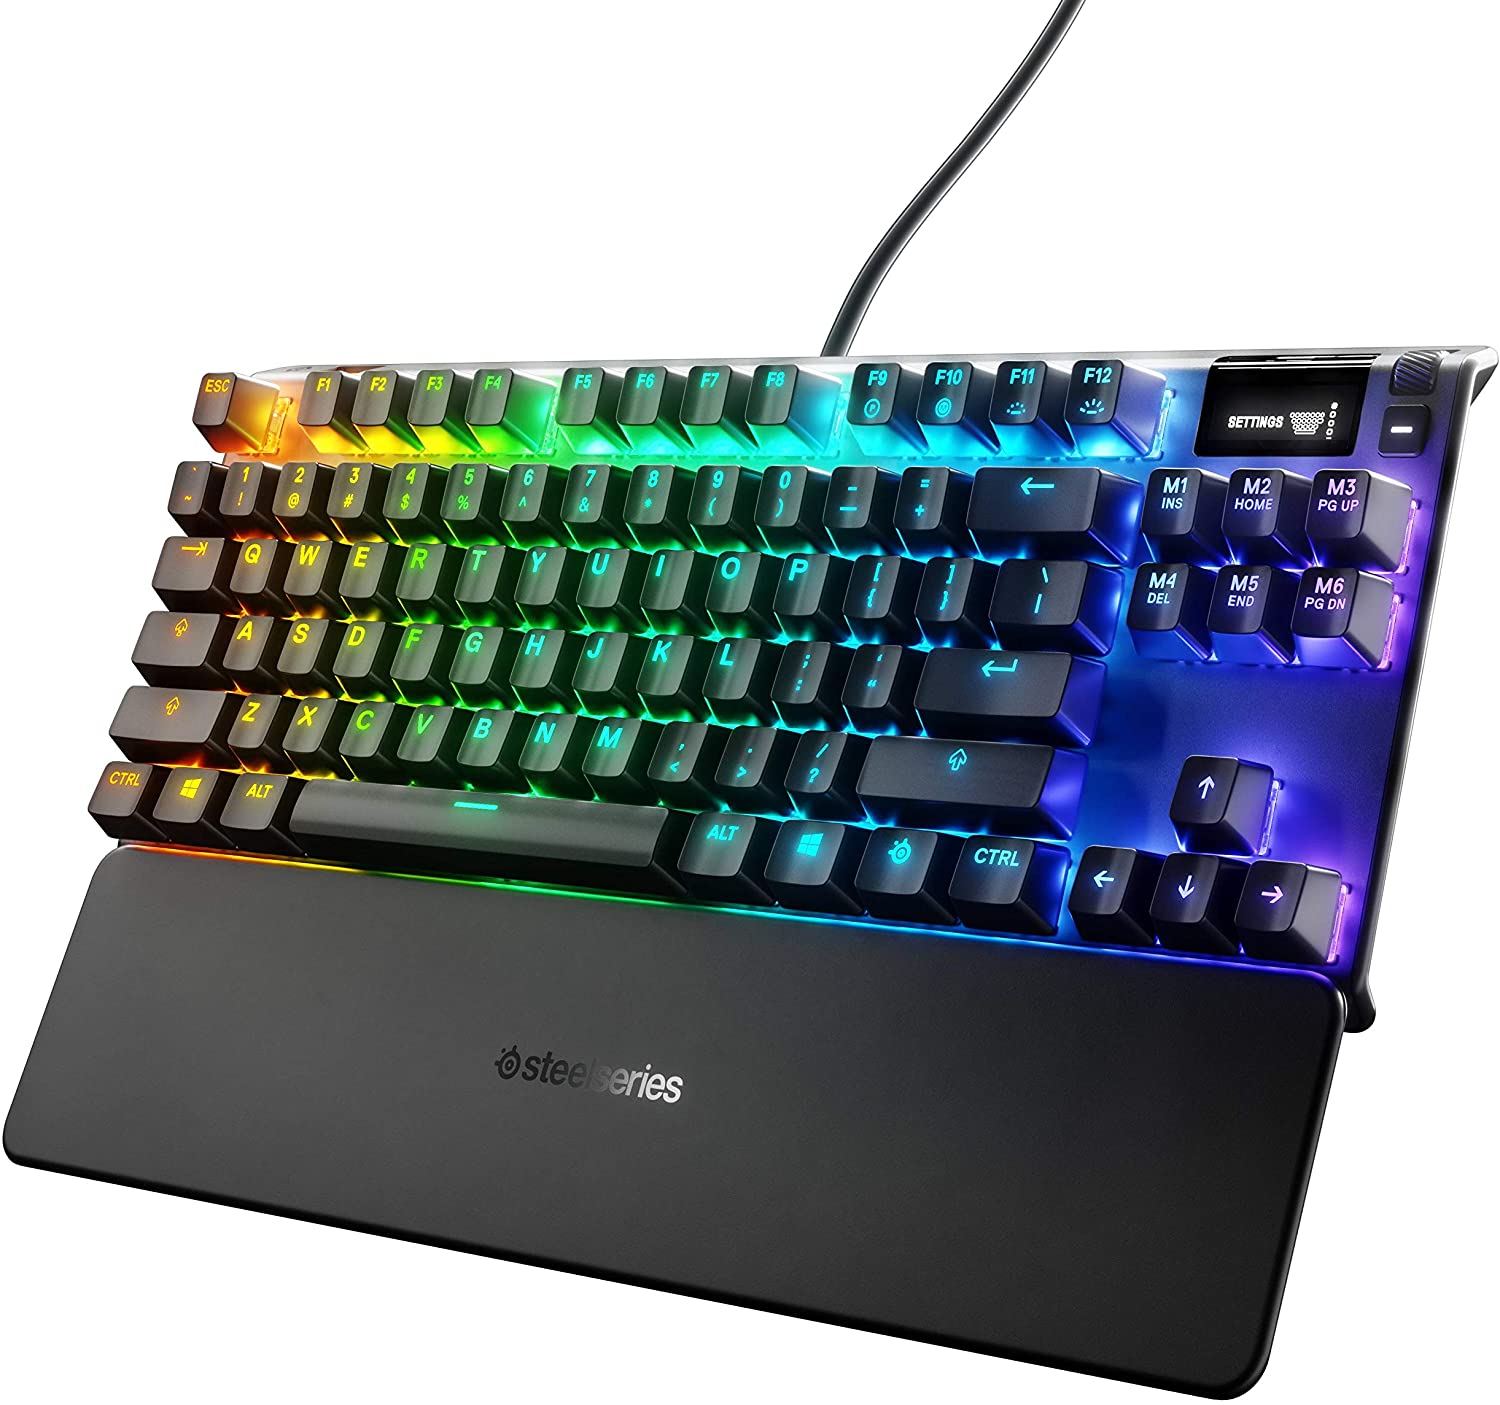 Apex 7 TKL Compact Mechanical Gaming Keyboard by SteelSeries